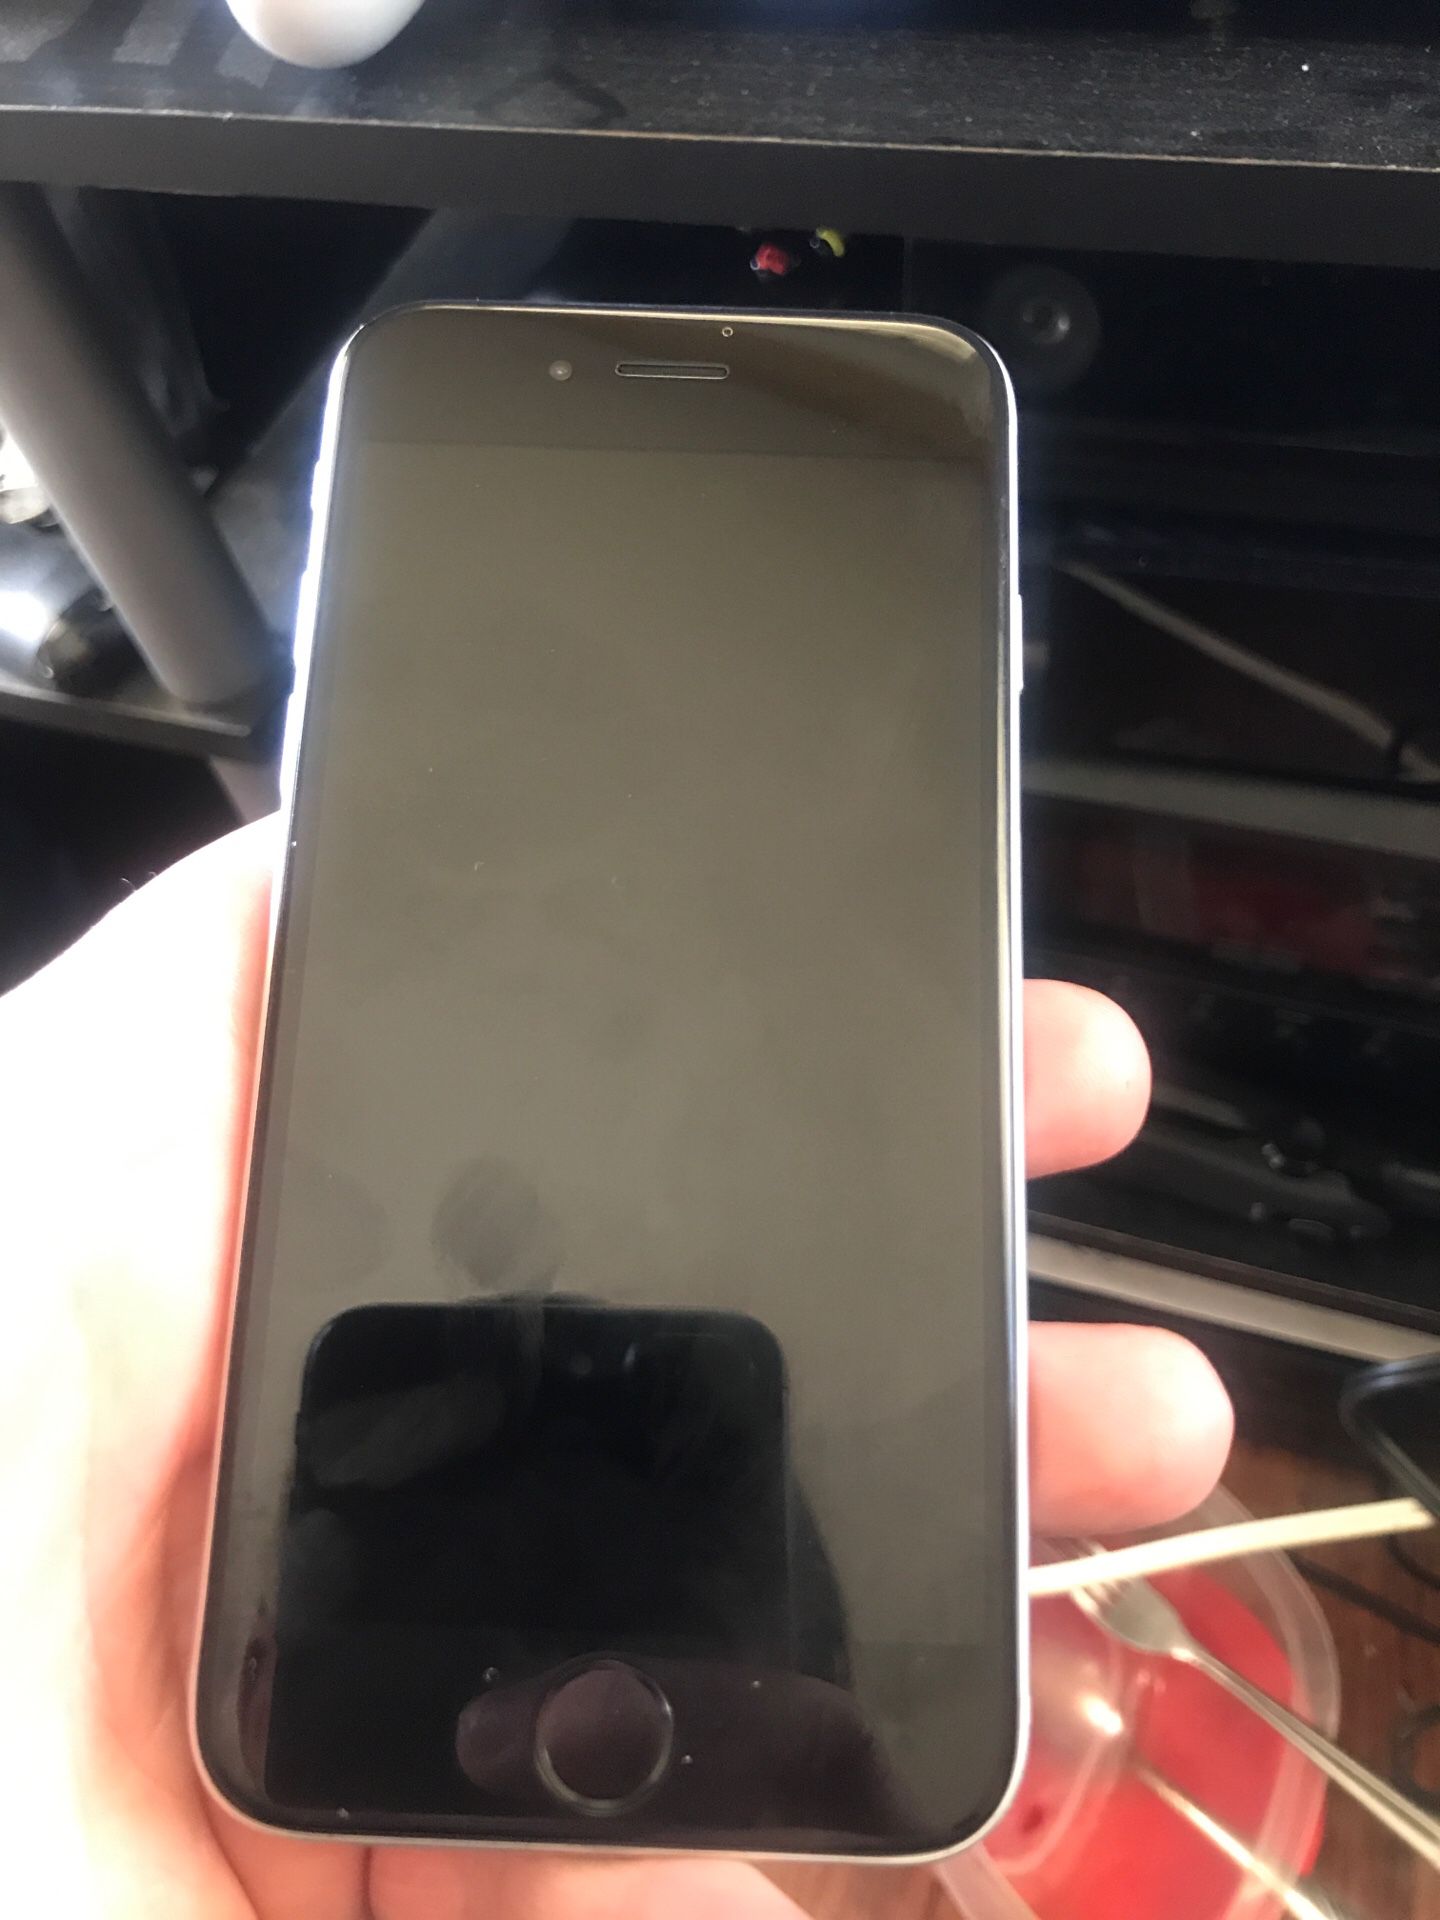 MINT, CLEAN UNLOCKED iPhone 6